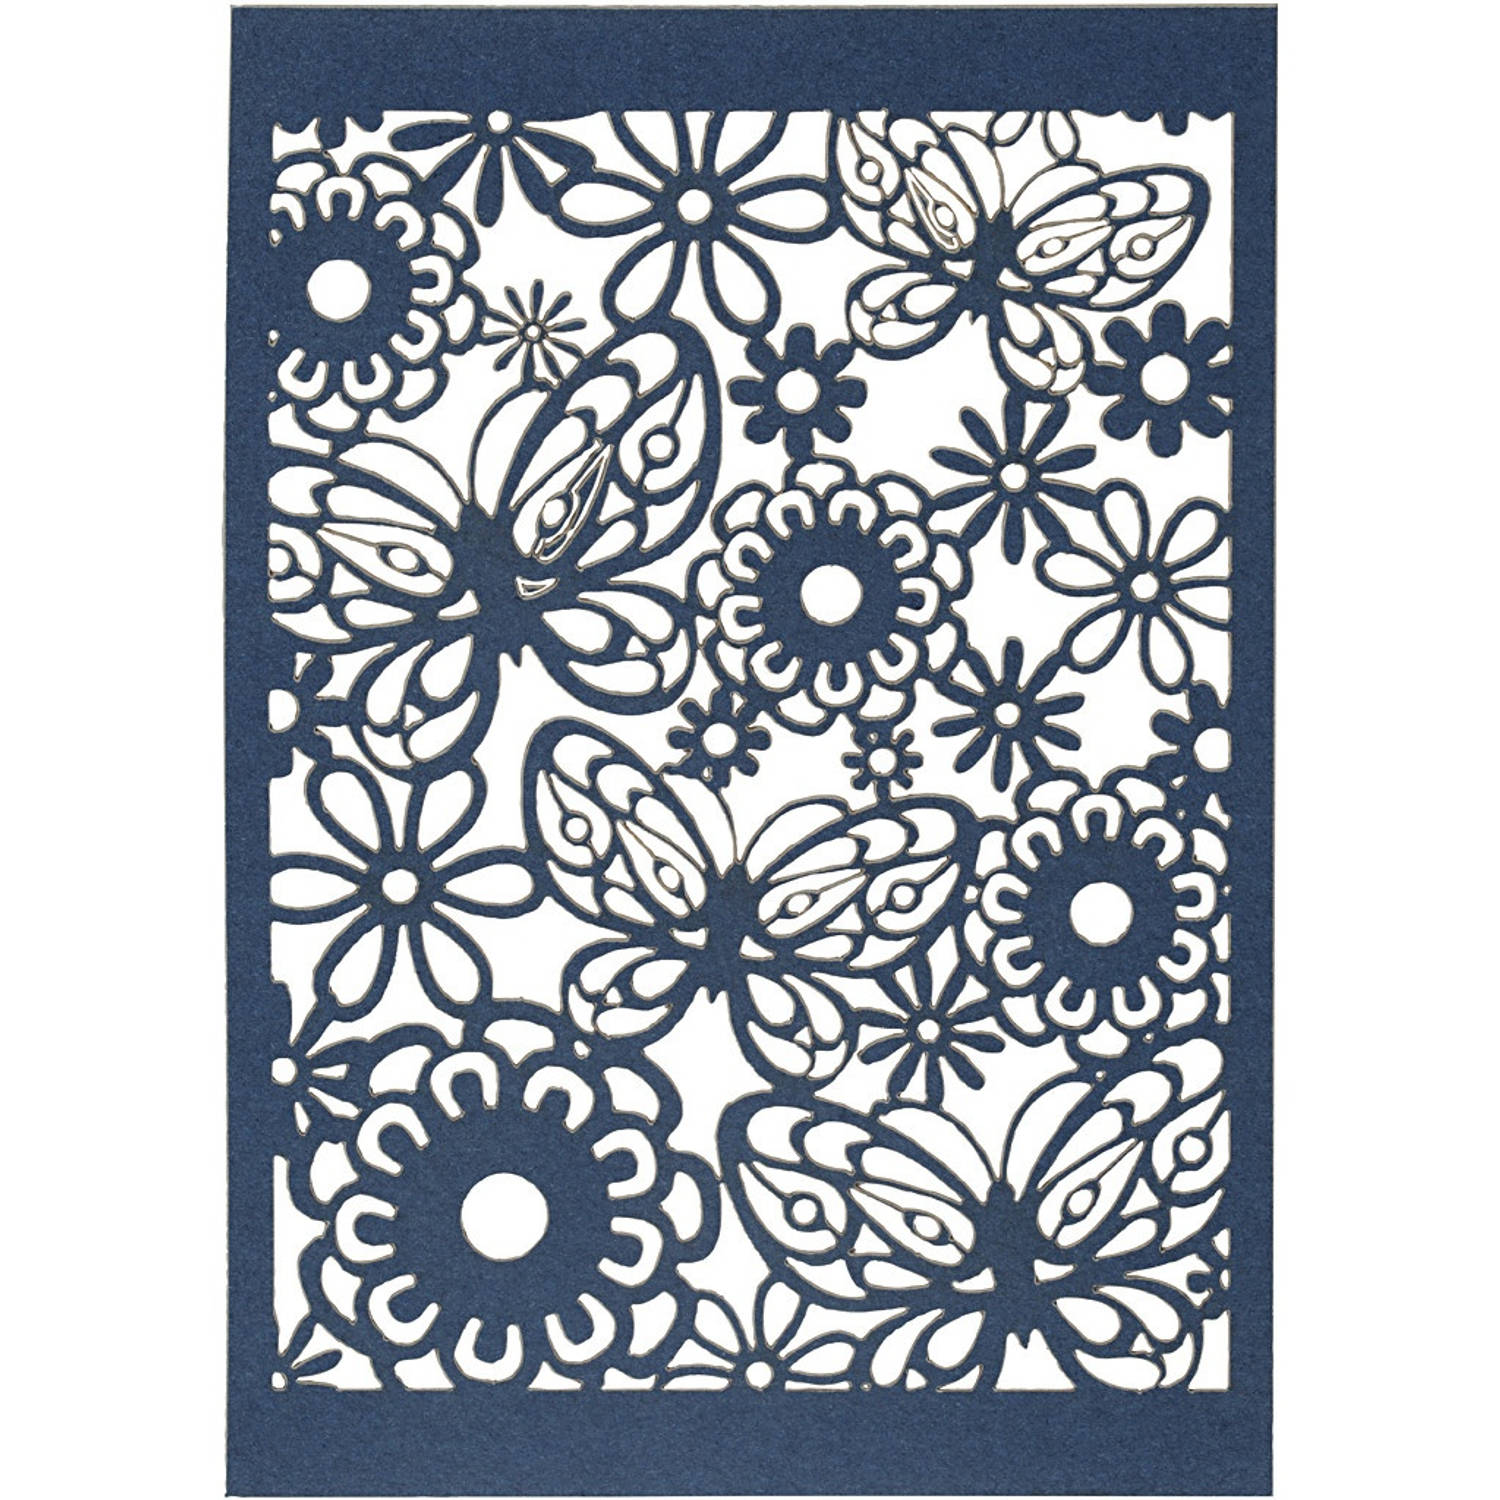 Creotime patroonkarton 10,5 x 14,8 cm 10 stuks blauw